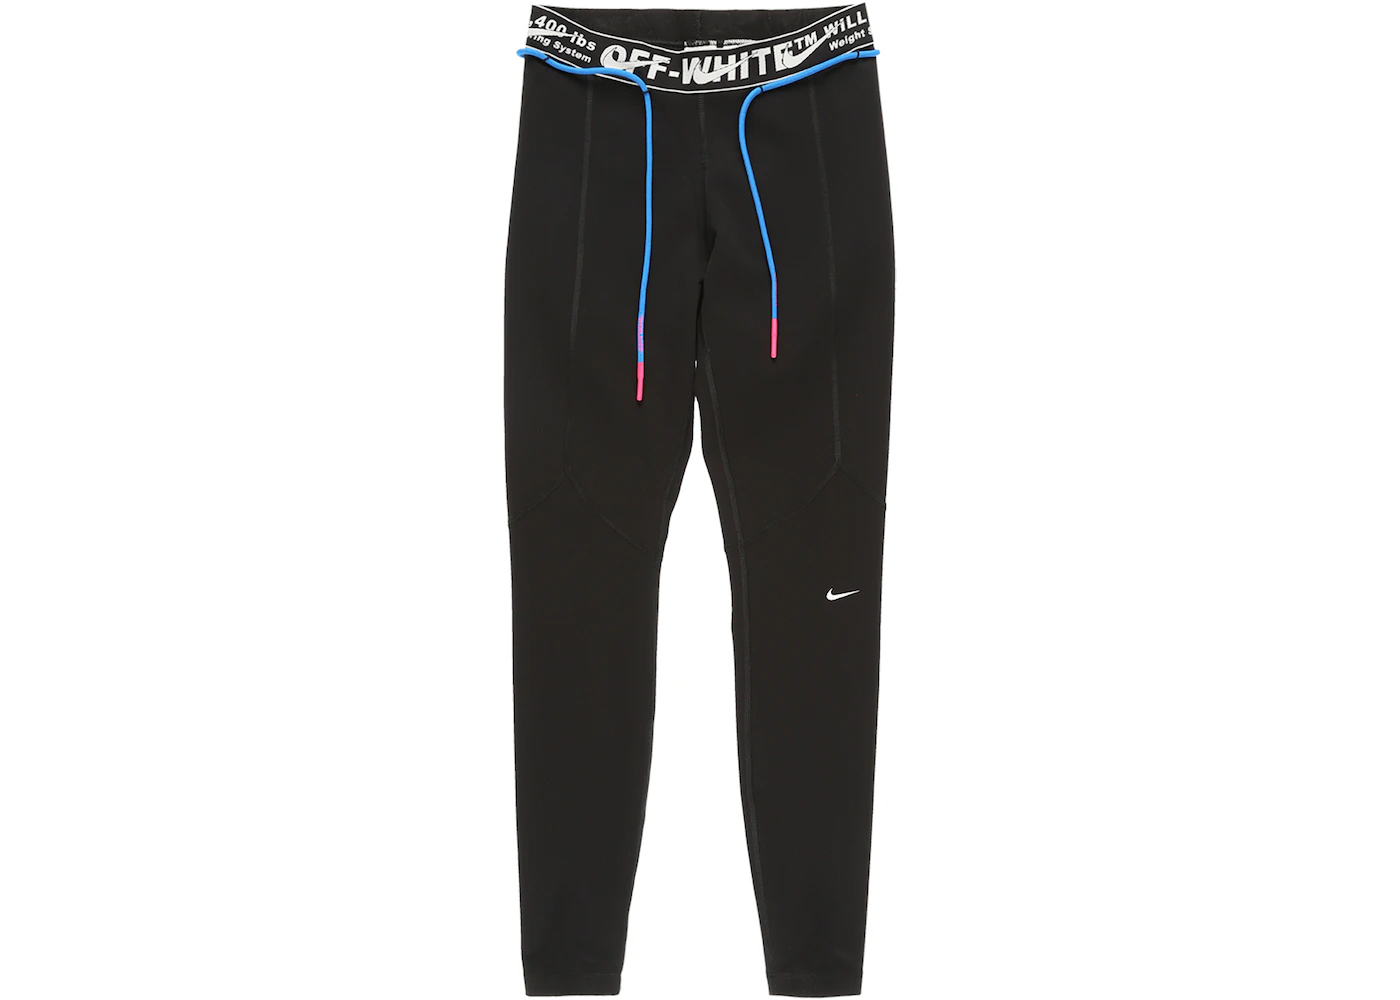 OFF-WHITE x Nike Women's Running Tight Black - FW19 - US